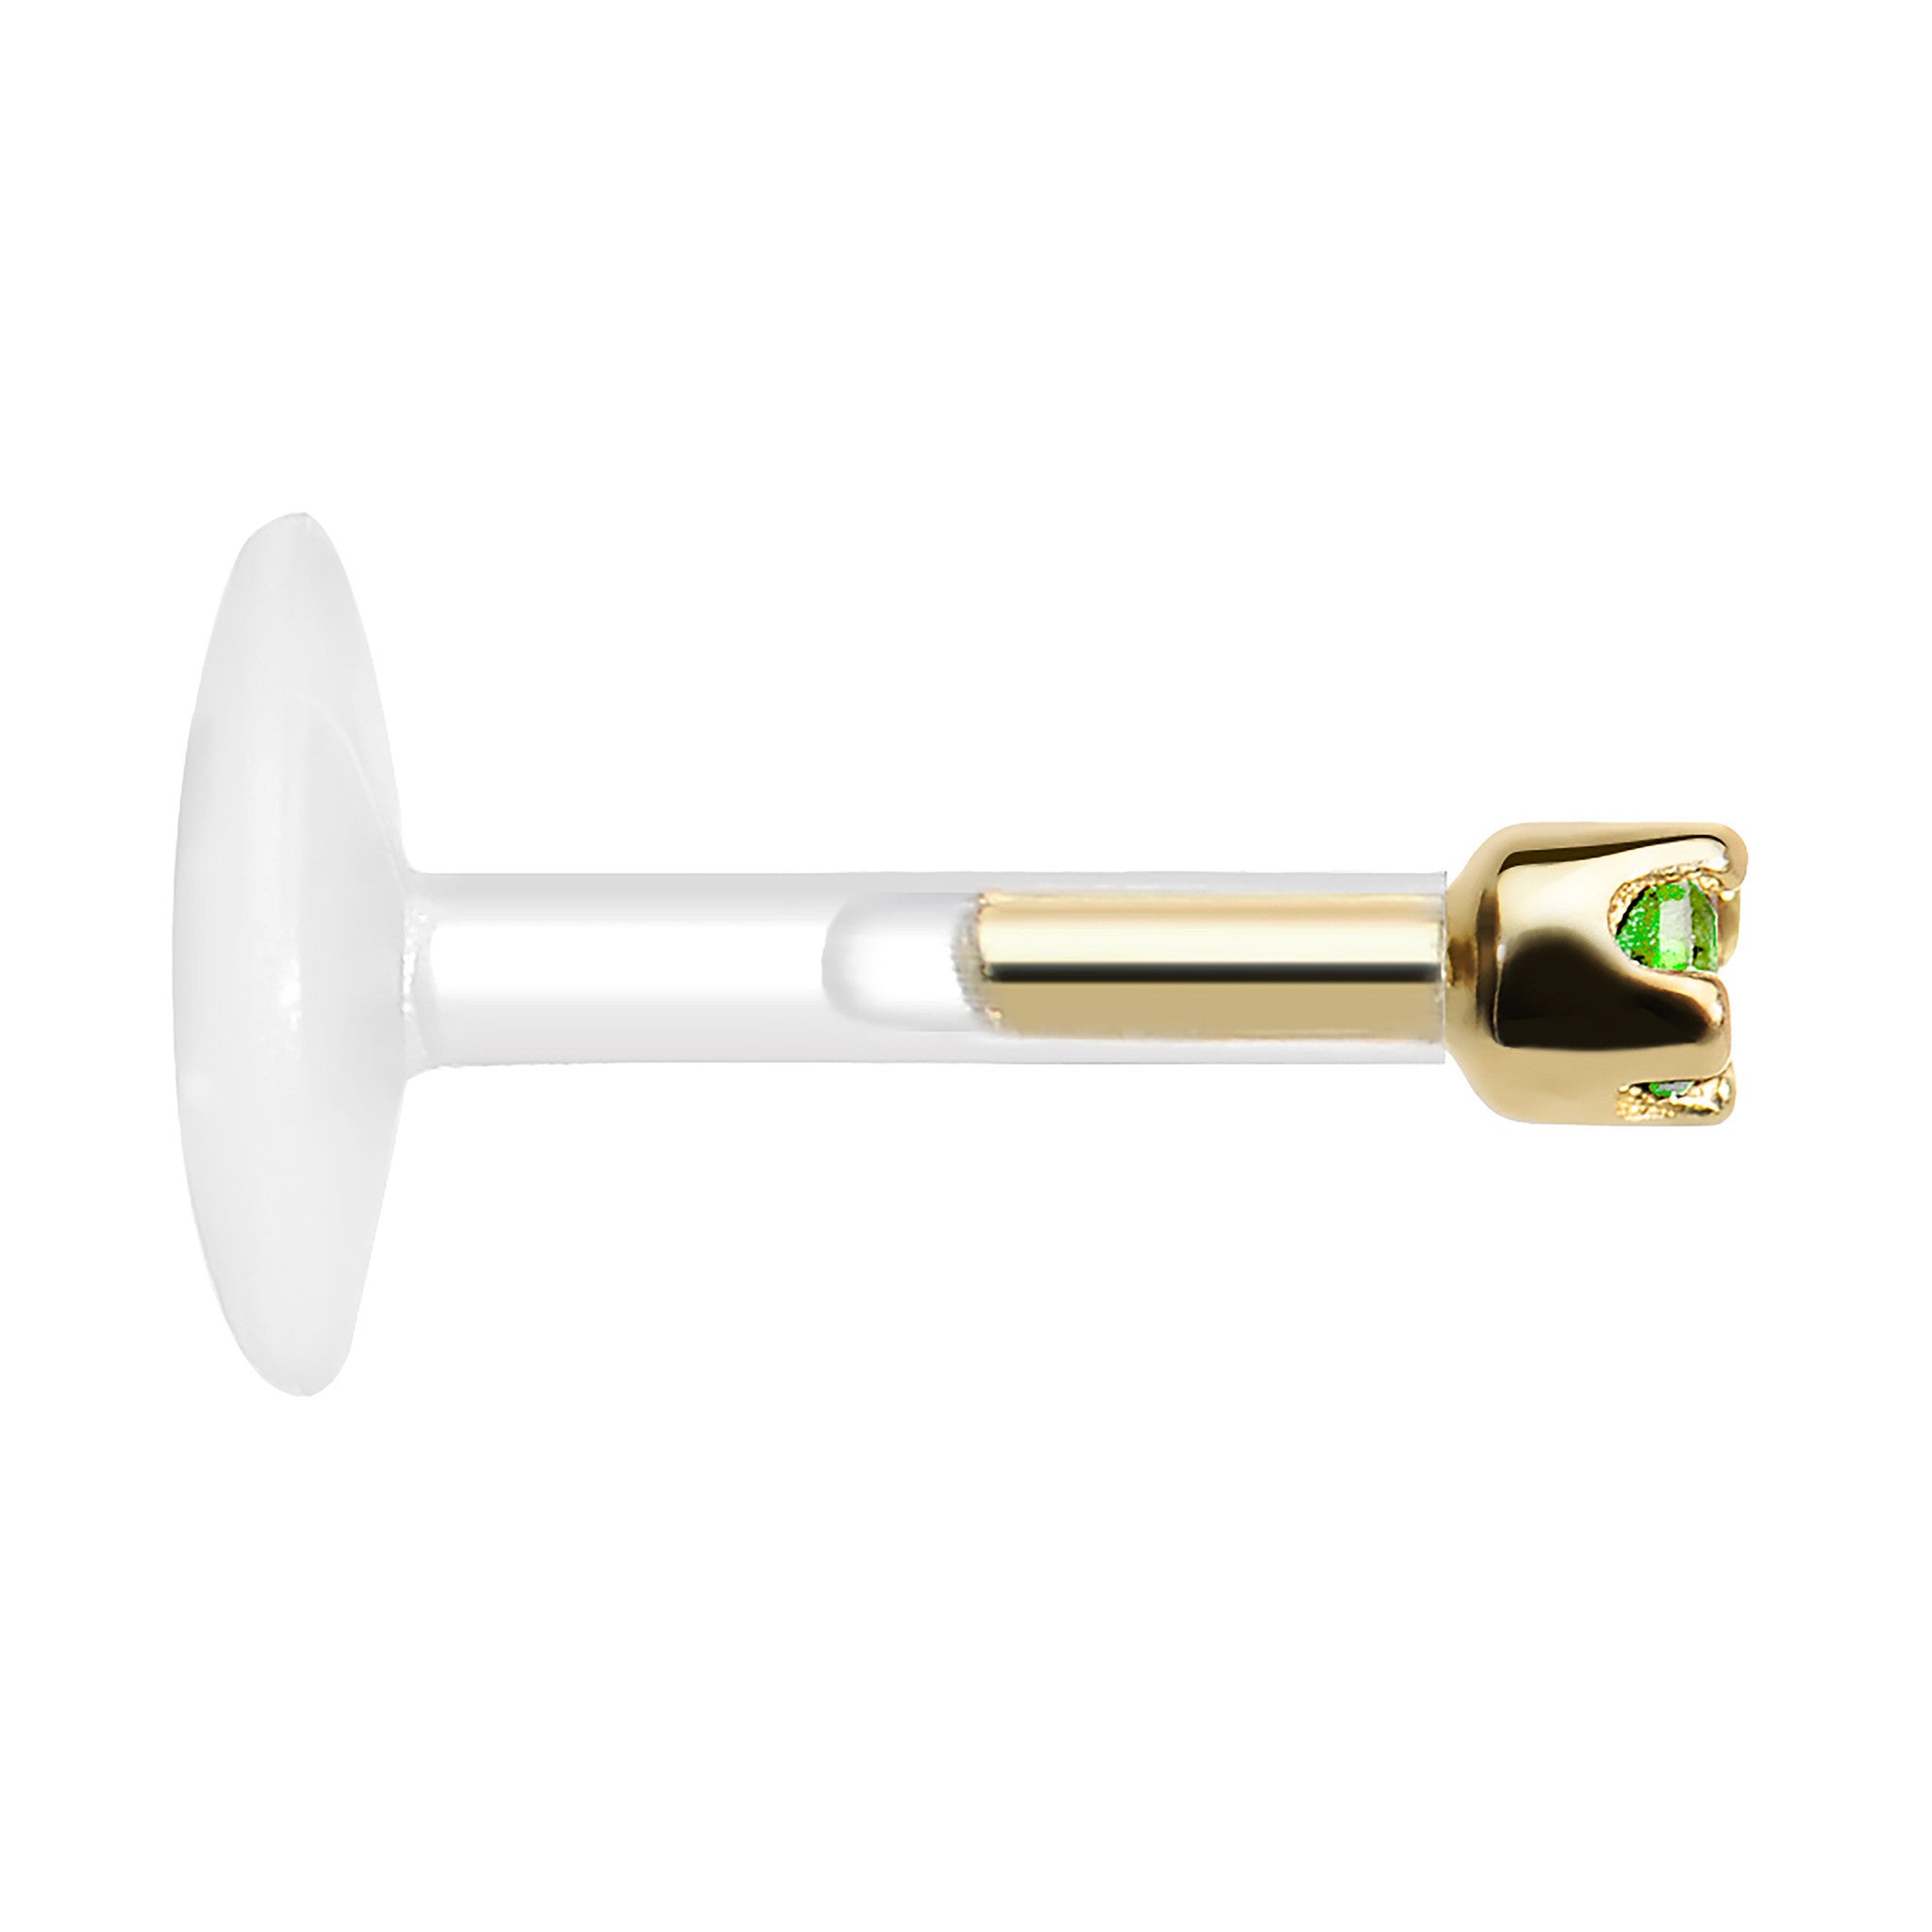 16 Gauge 1/4 14KT Yellow Gold May 1.5mm CZ Bioplast Push in Cartilage Earring